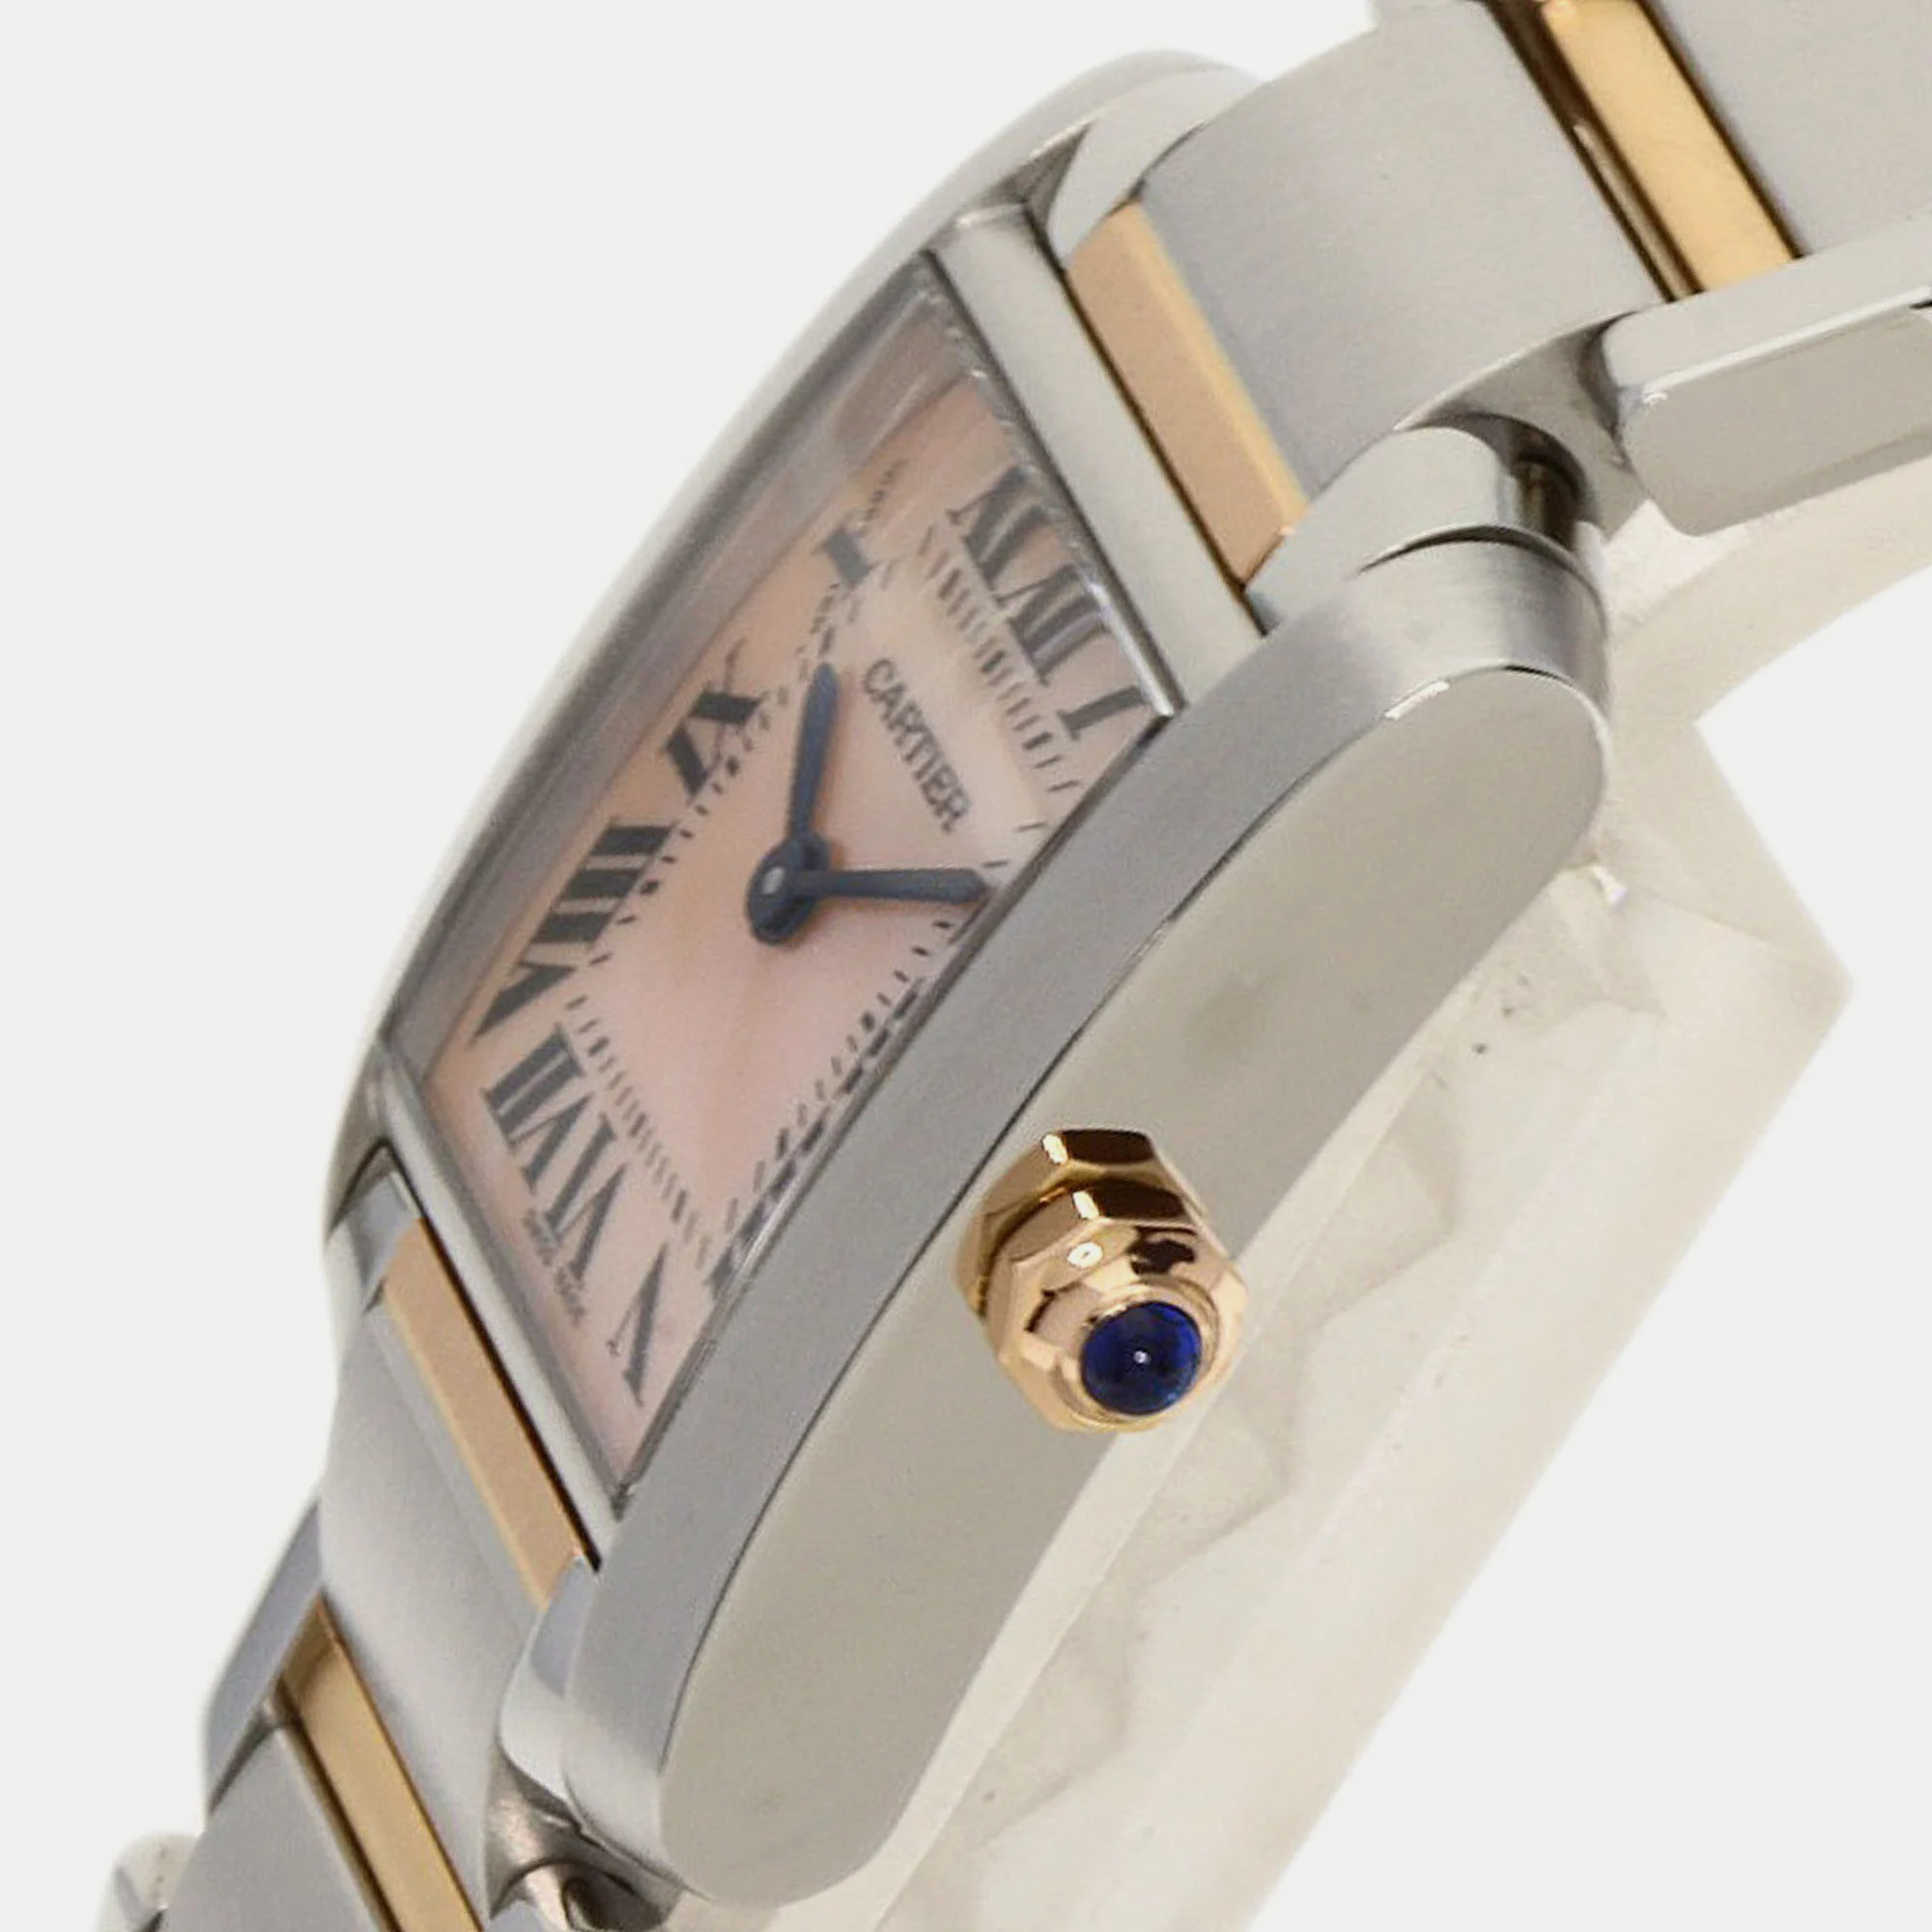 Cartier Pink 18k Rose Gold And Stainless Steel Tank Francaise W51027Q4 Quartz Women's Wristwatch 20 Mm